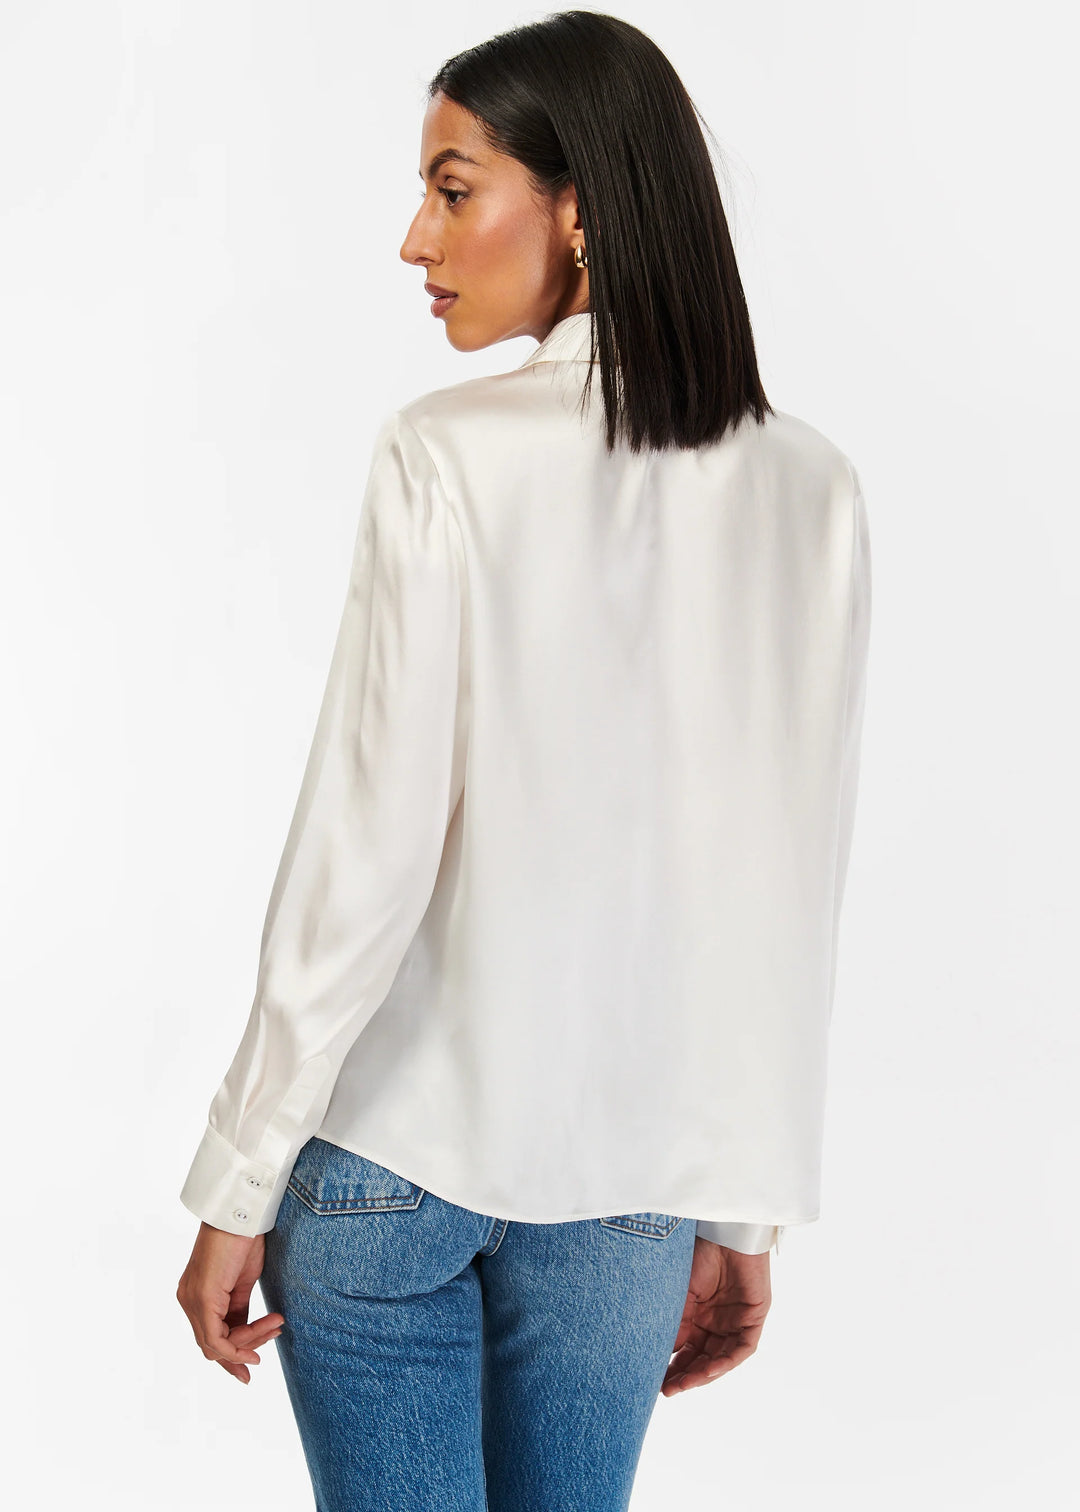 Cami NYC Sheryl Silk Button Down Top - White